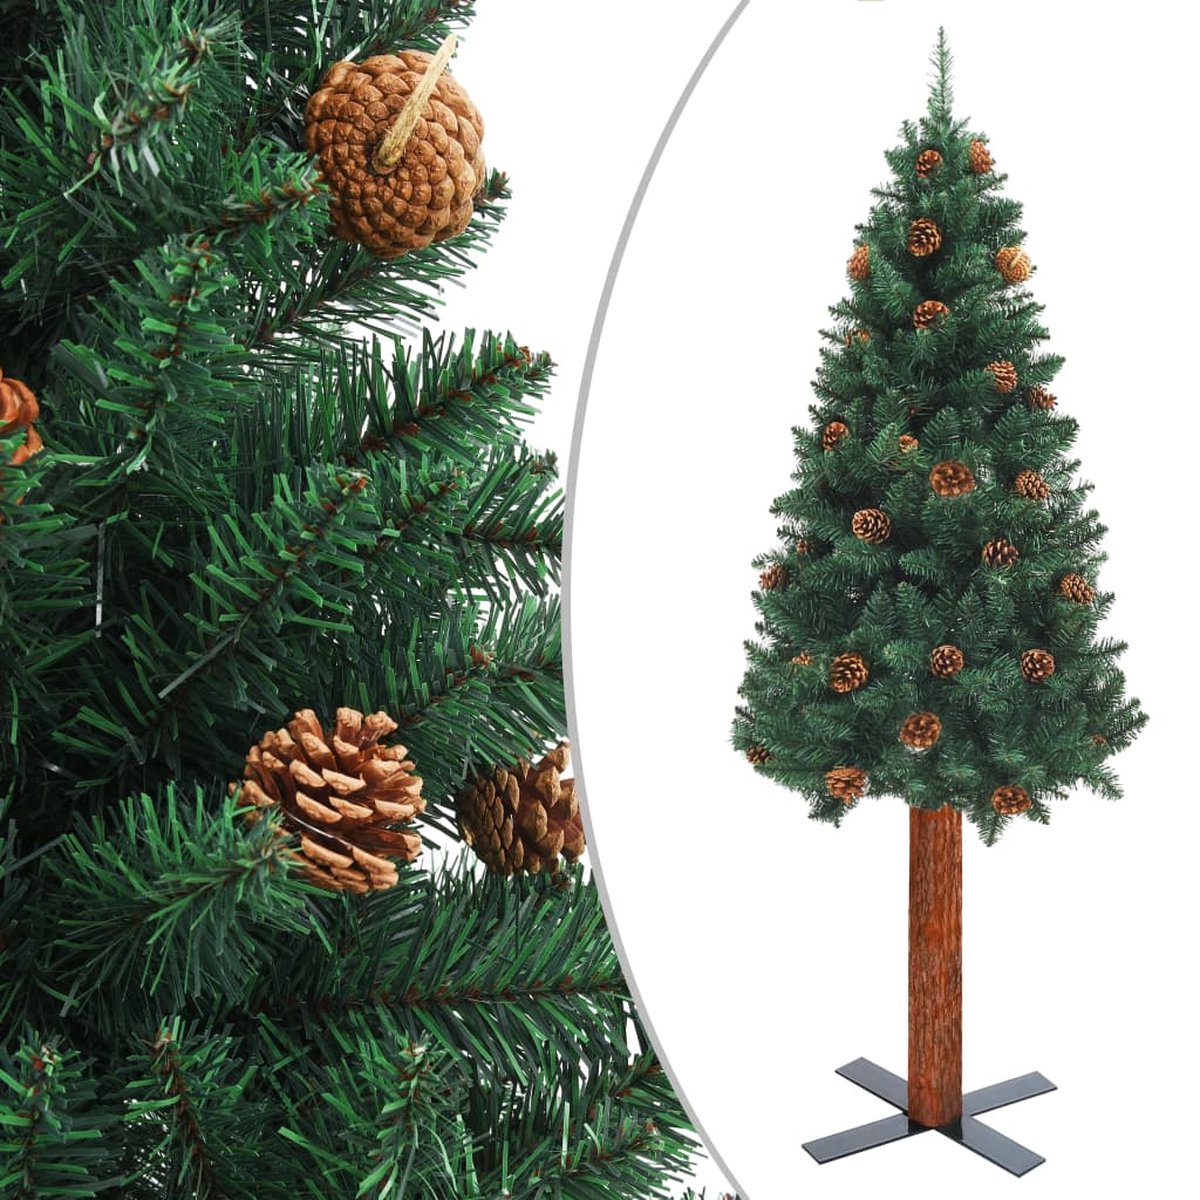 VidaLife Kerstboom met echt hout en dennenappels smal 180 cm PVC groen